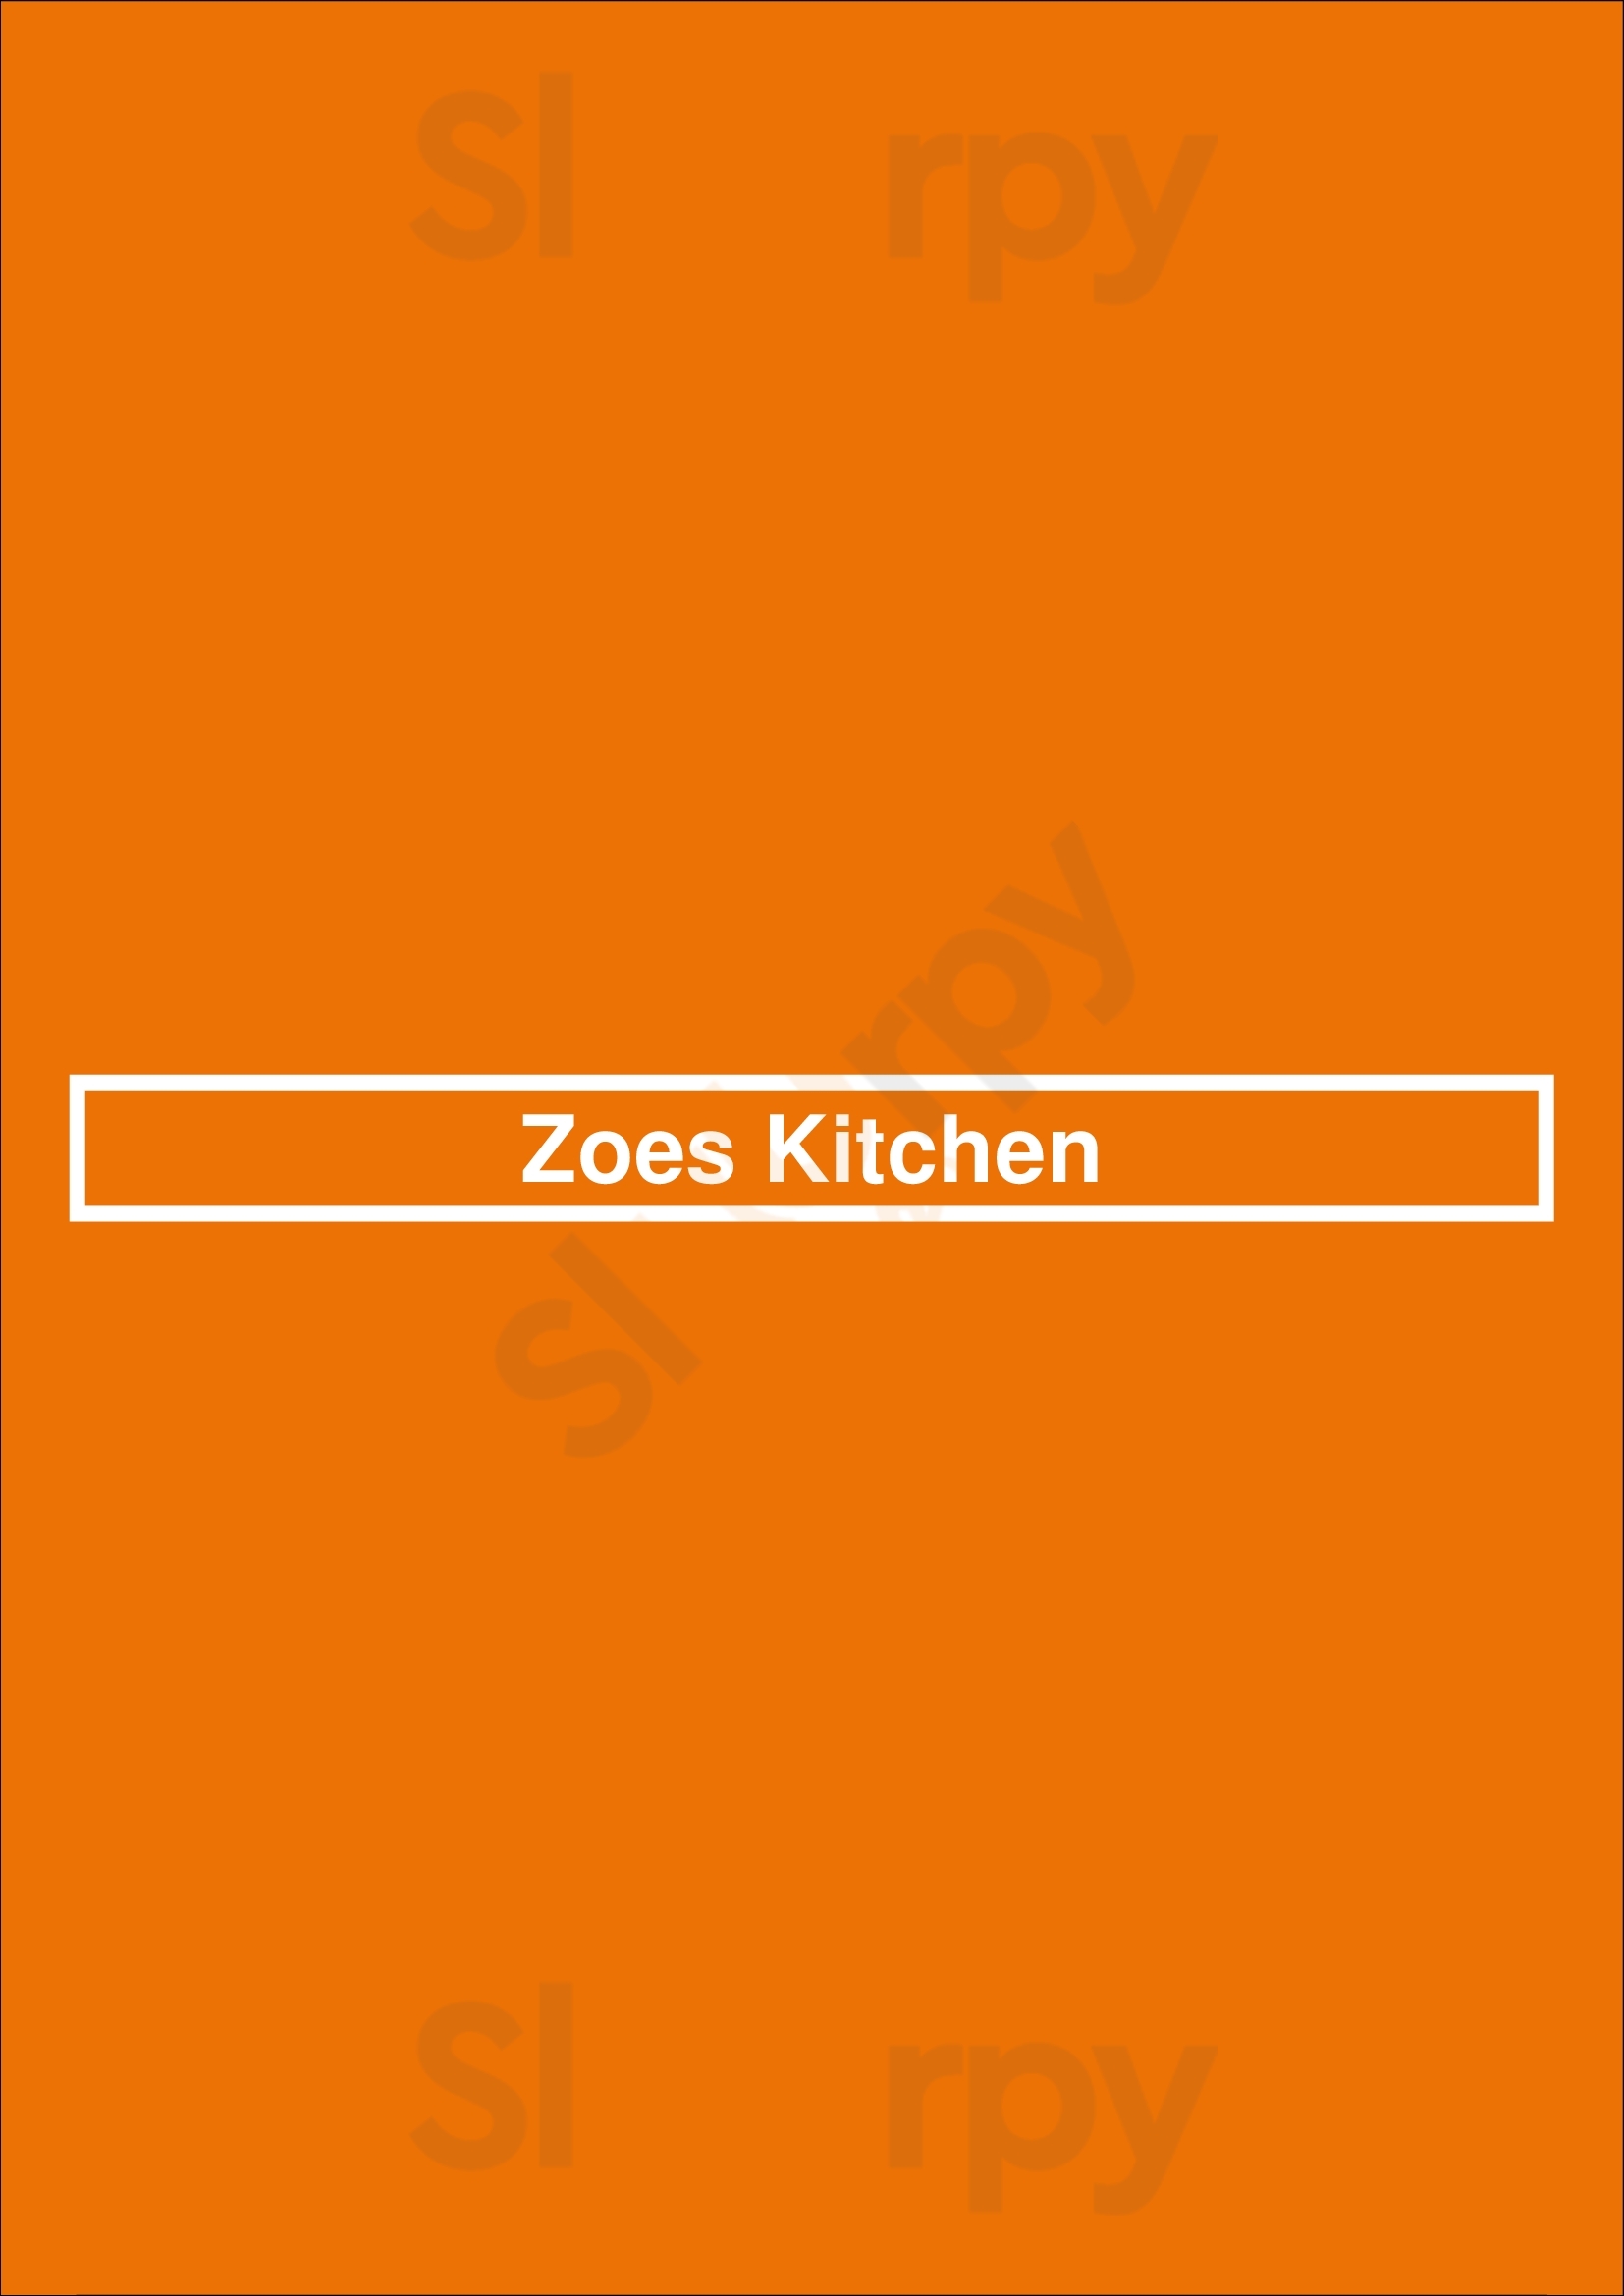 Zoes Kitchen Alexandria Menu - 1